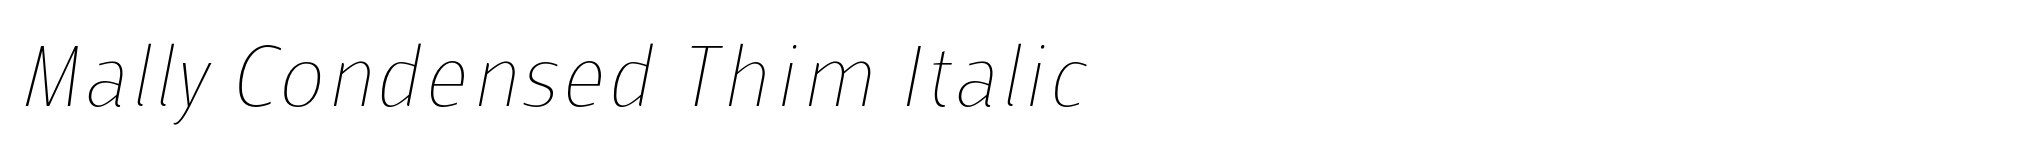 Mally Condensed Thim Italic image